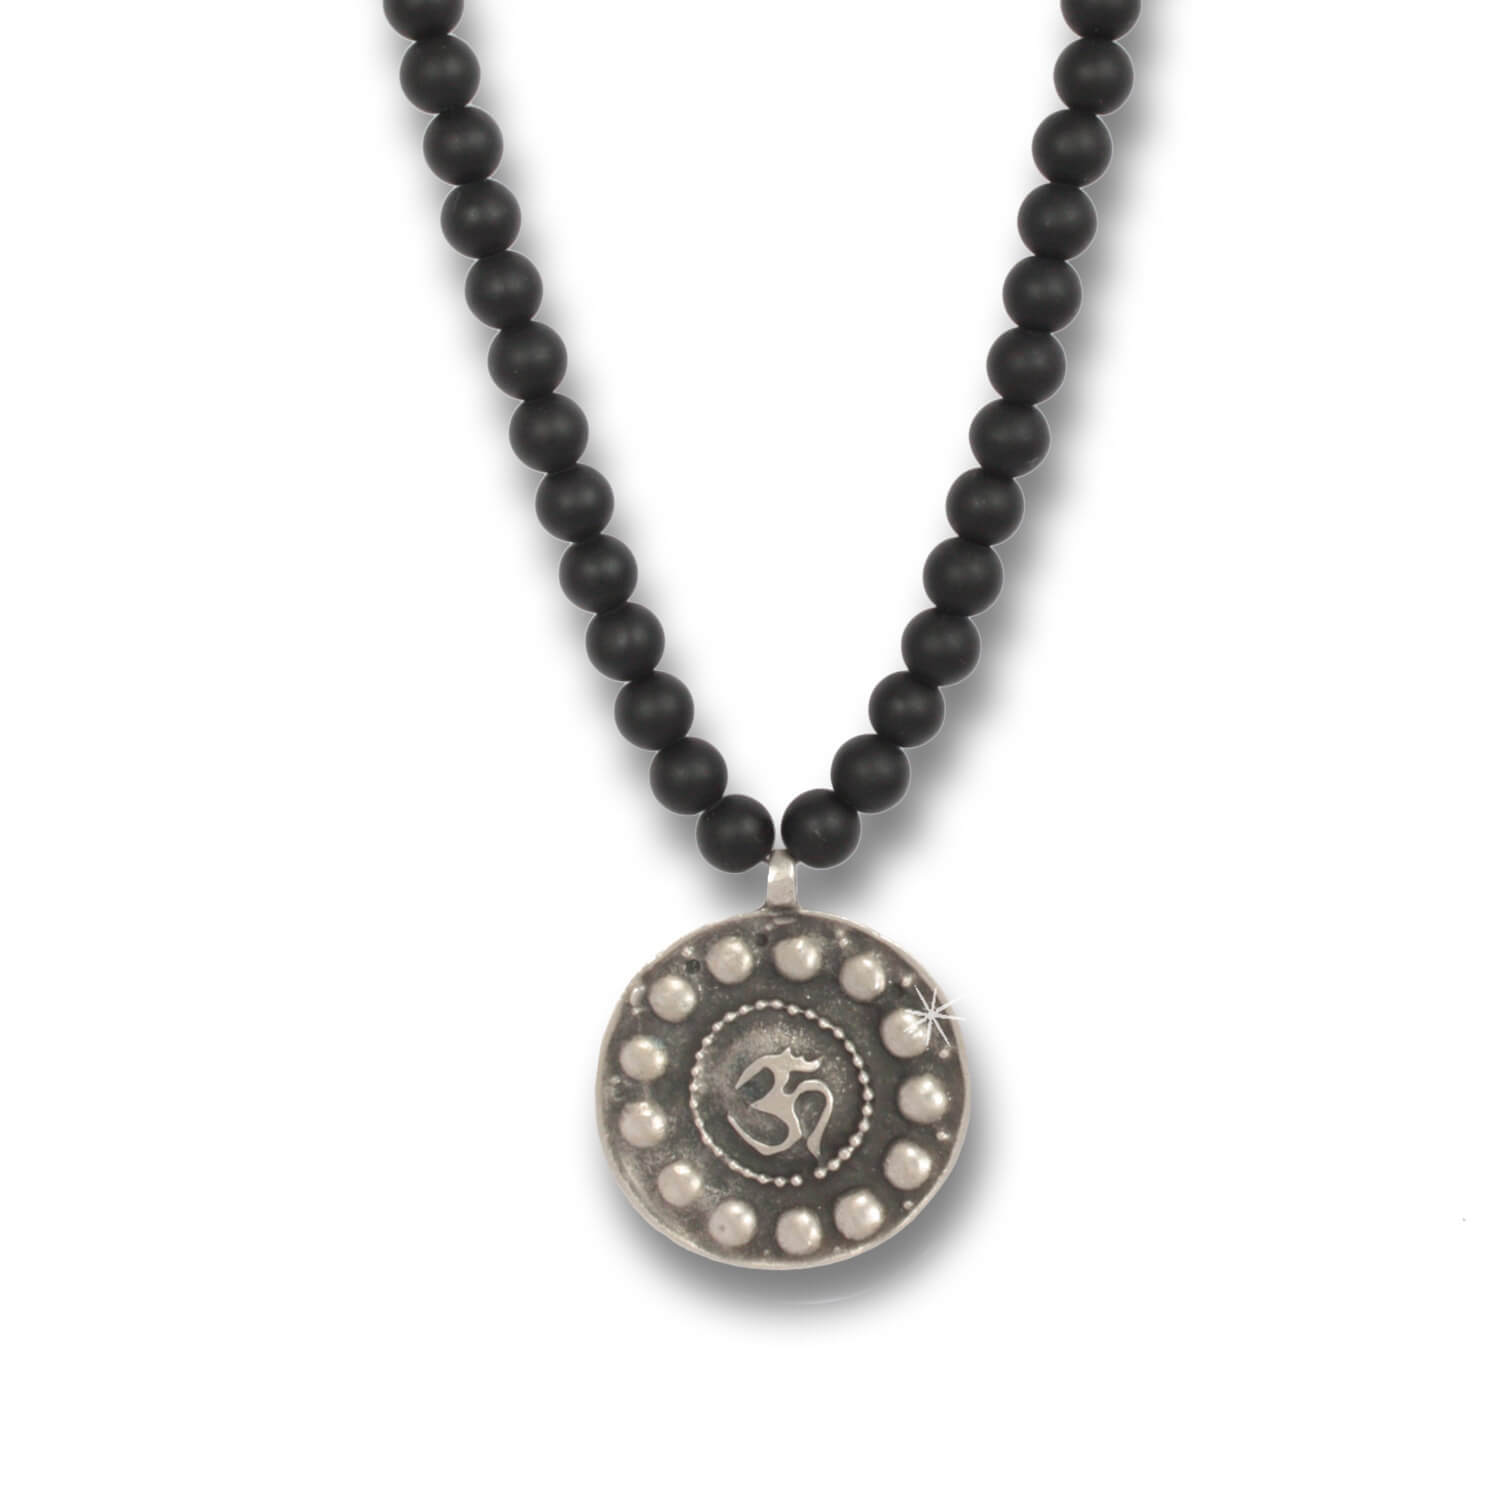 Antique Silver Om Coin - Indian Symbols onyx necklace for men, 80 cm